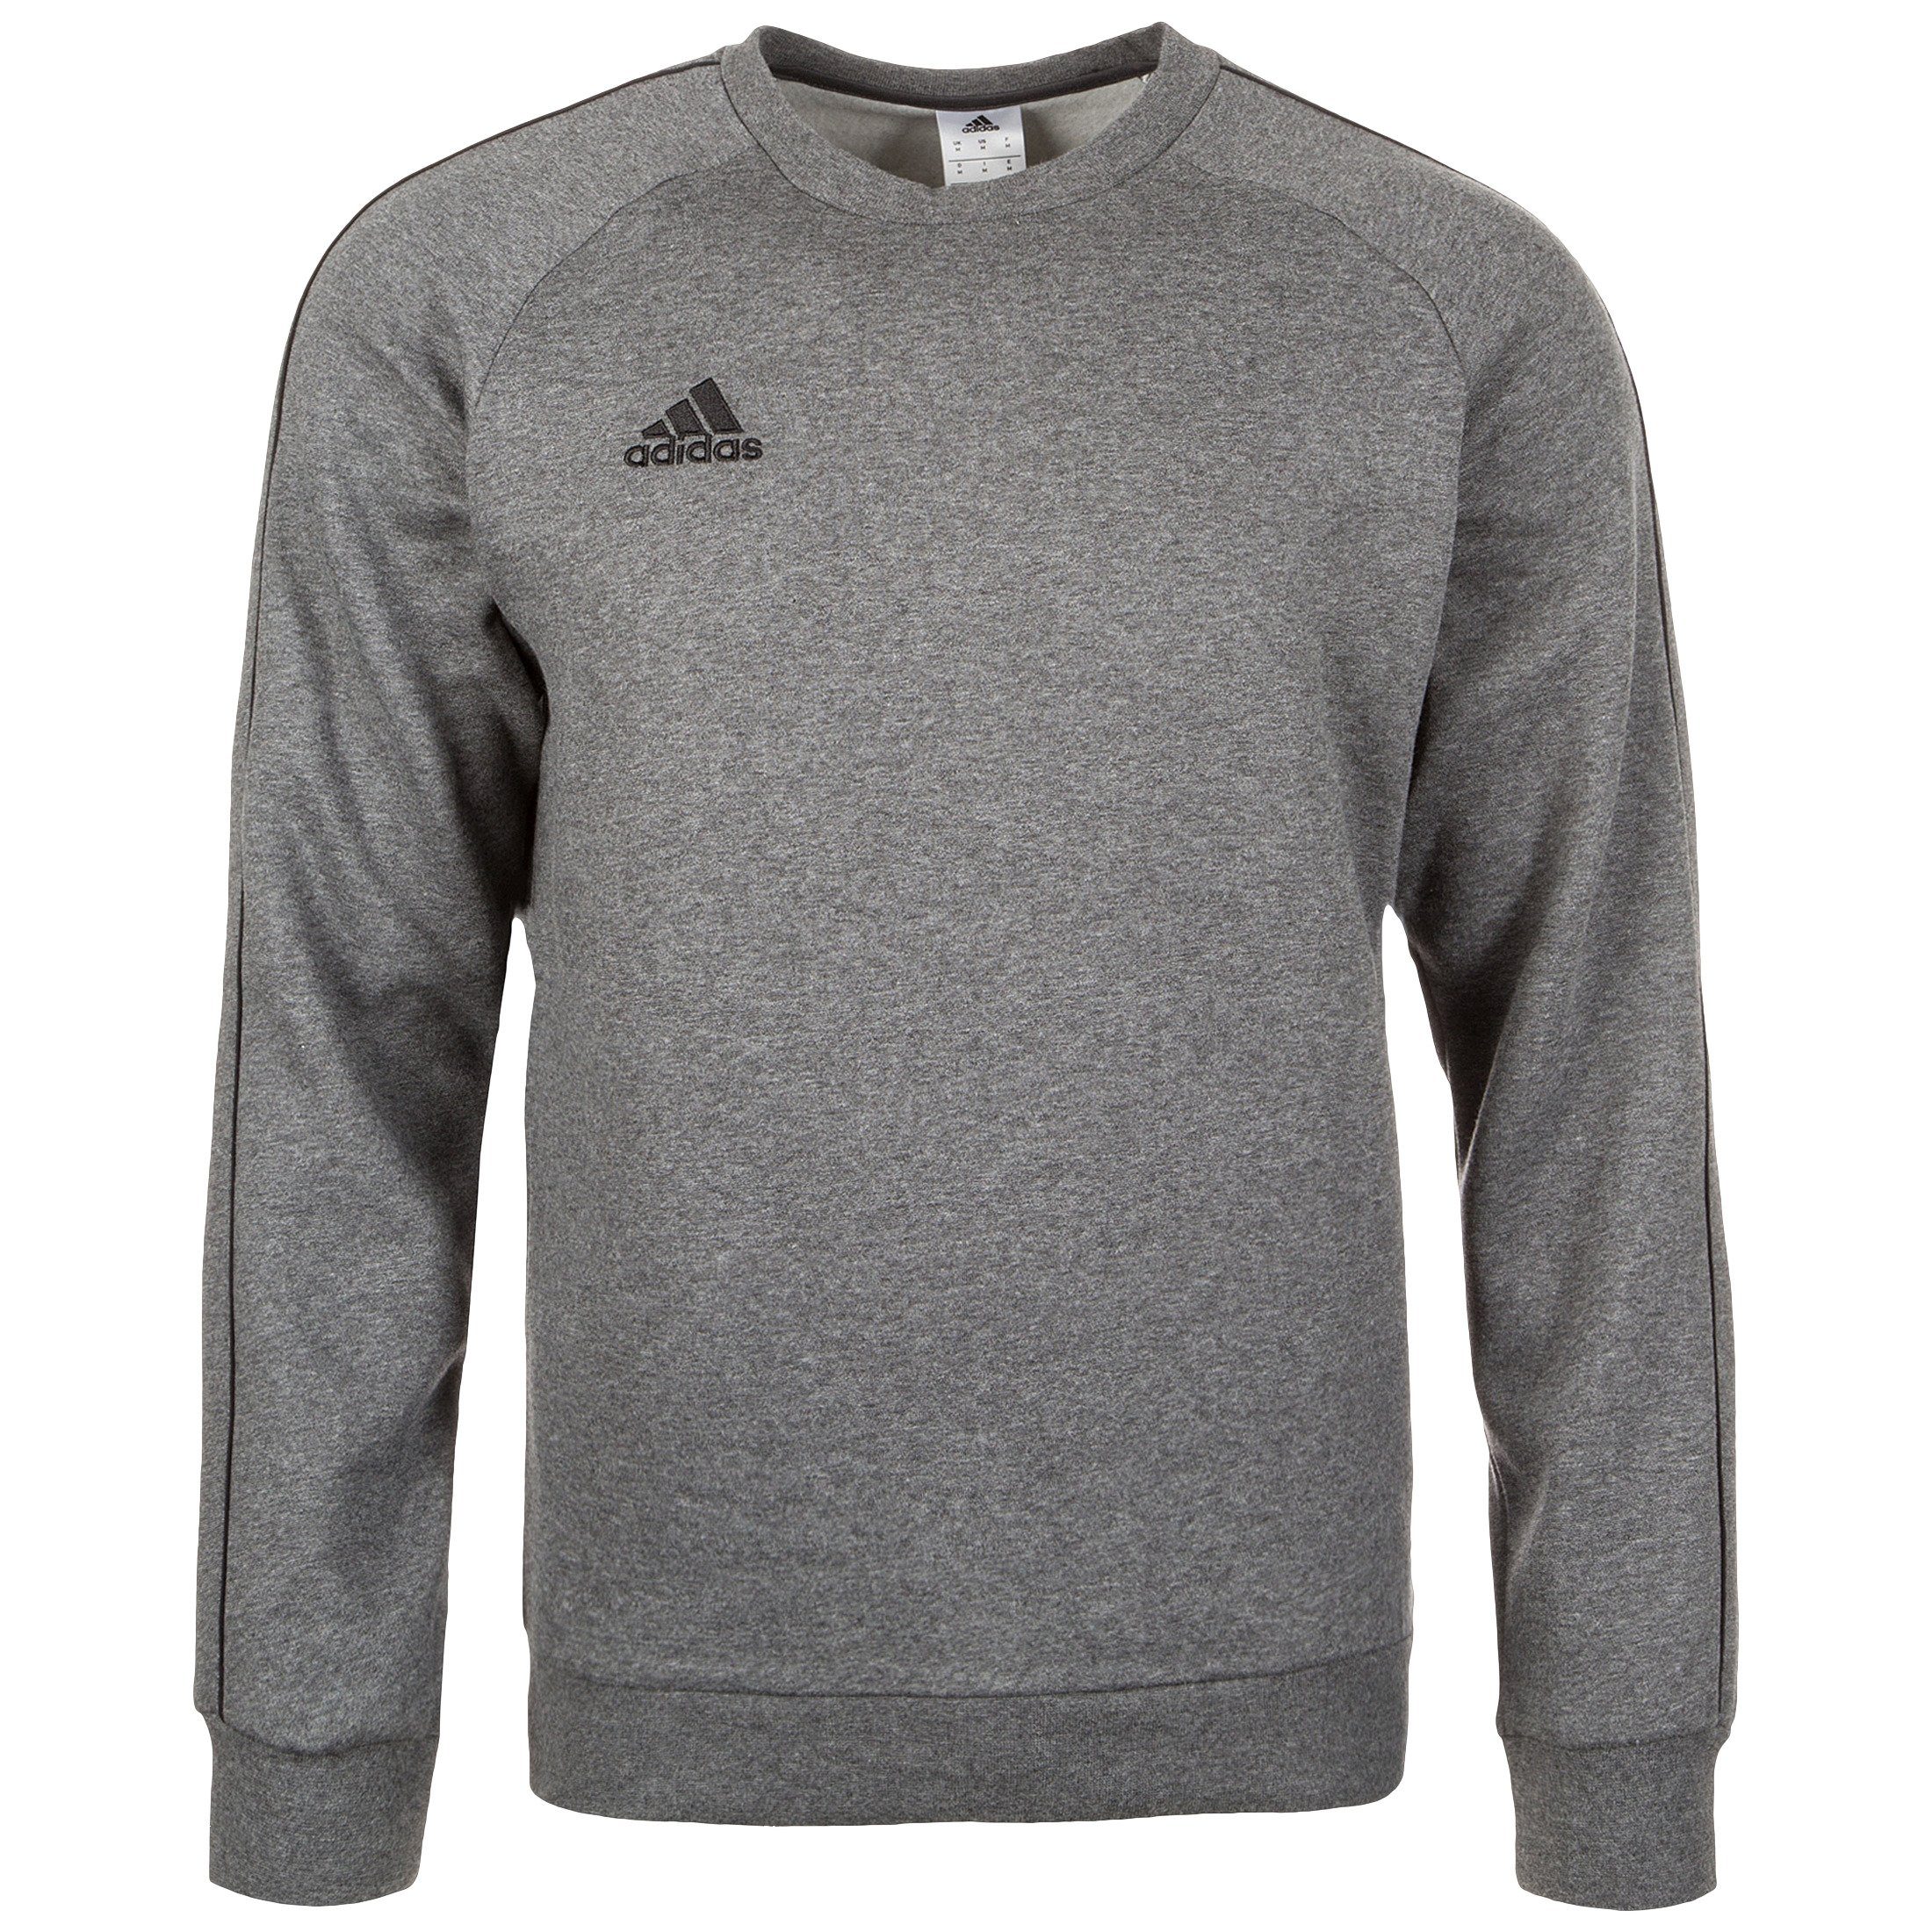 adidas Performance Sweatshirt Core 18 Sweatshirt Herren dunkelgrau / weiß